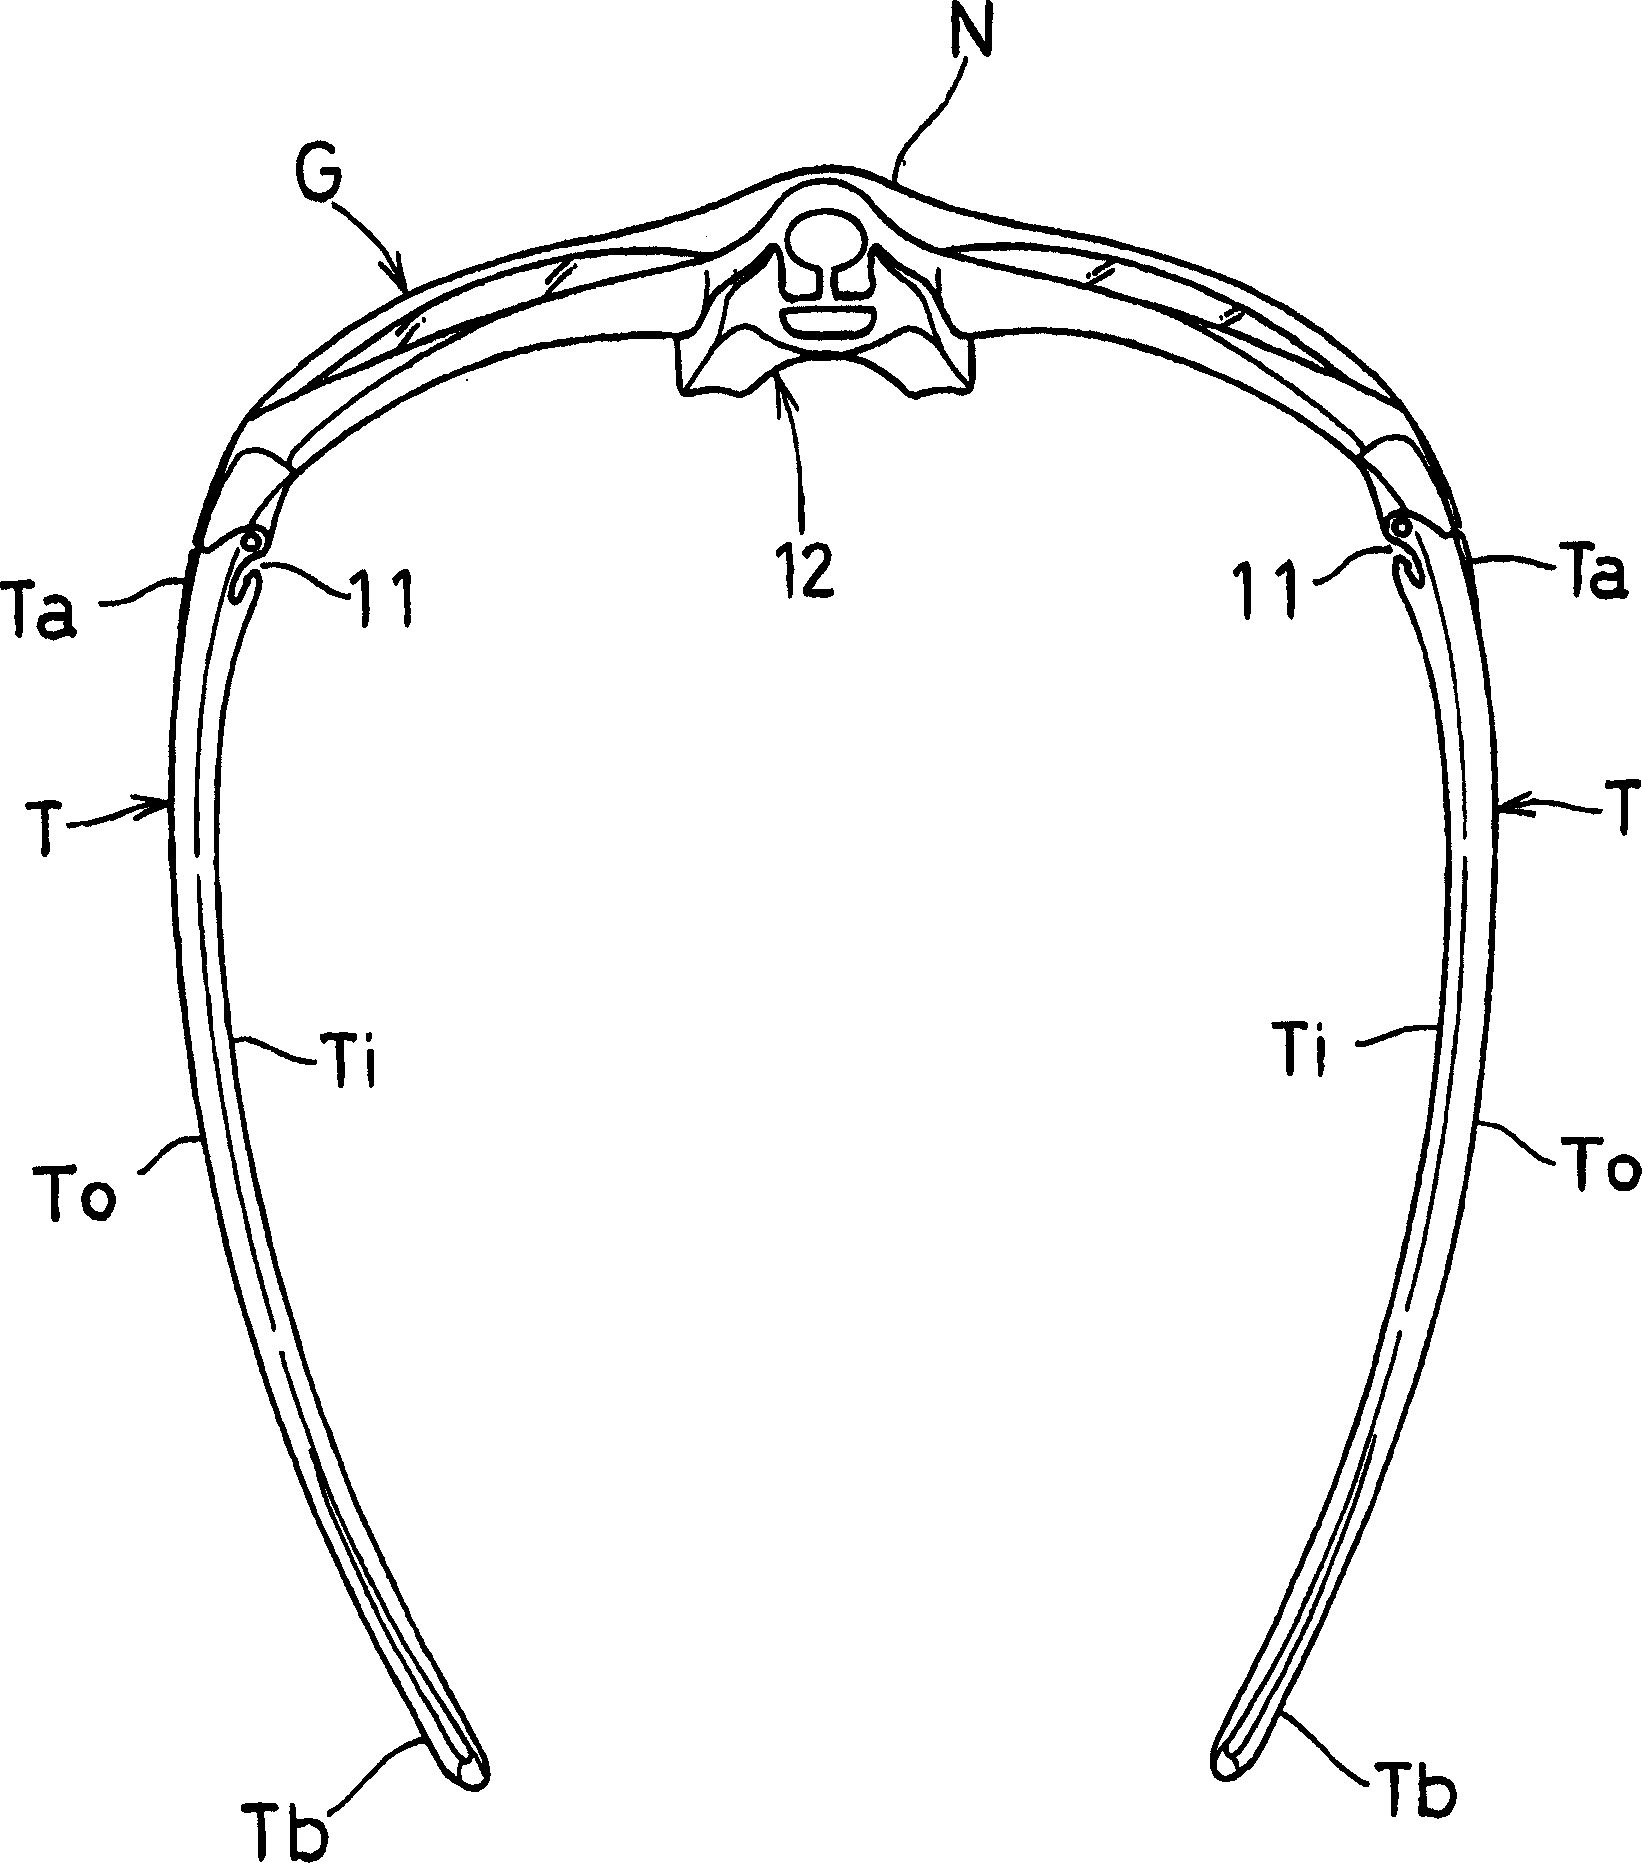 Eyeglass retainer belt and eyeglass possessing same